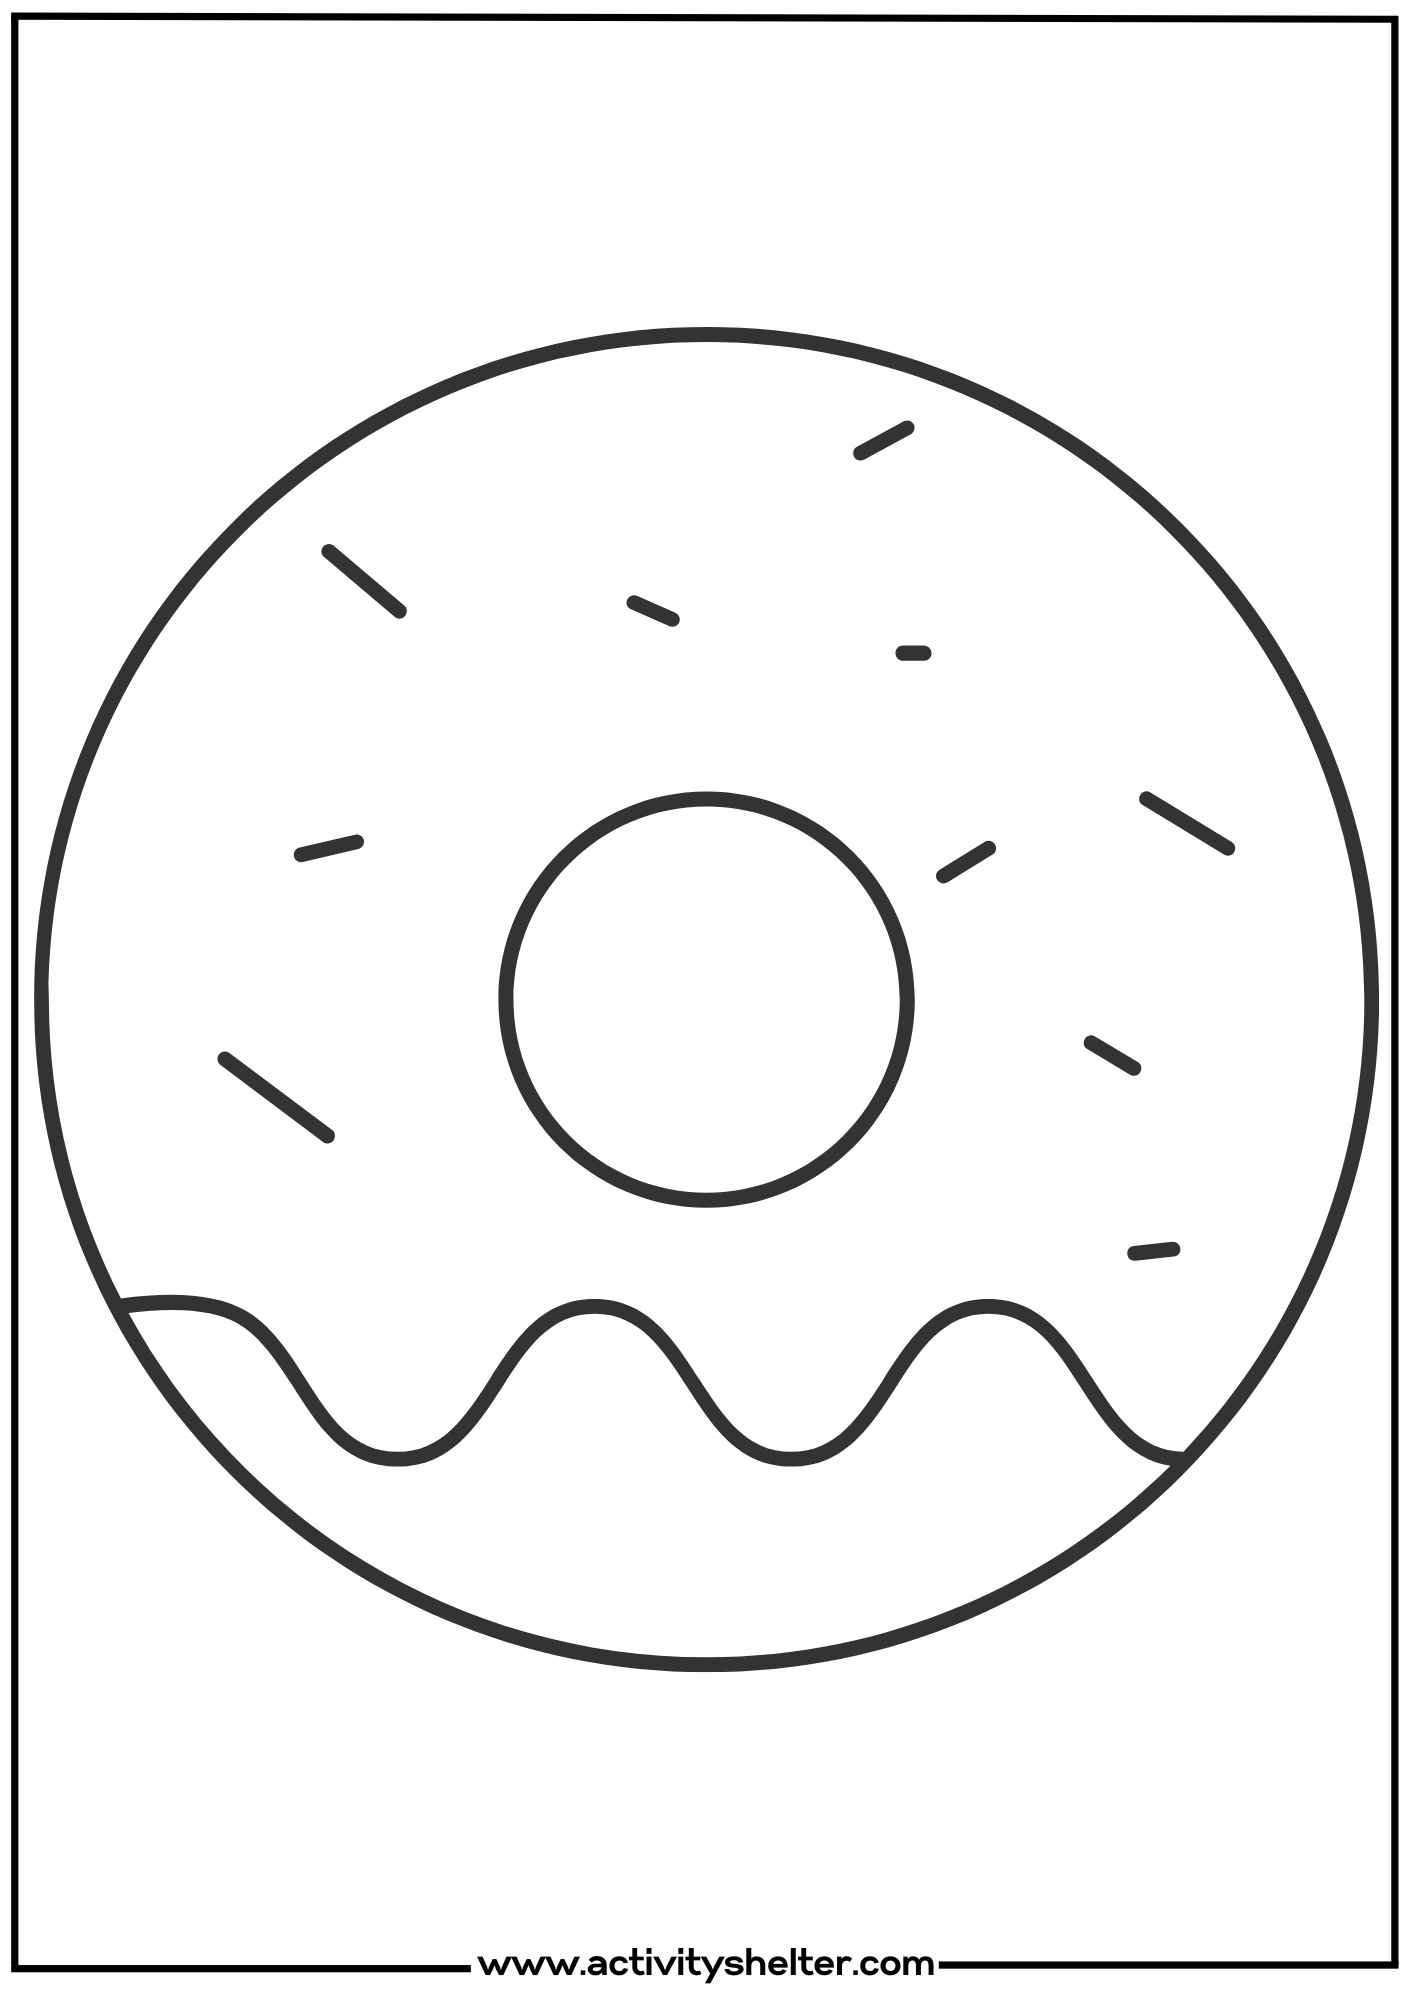 Donut Coloring Sheet